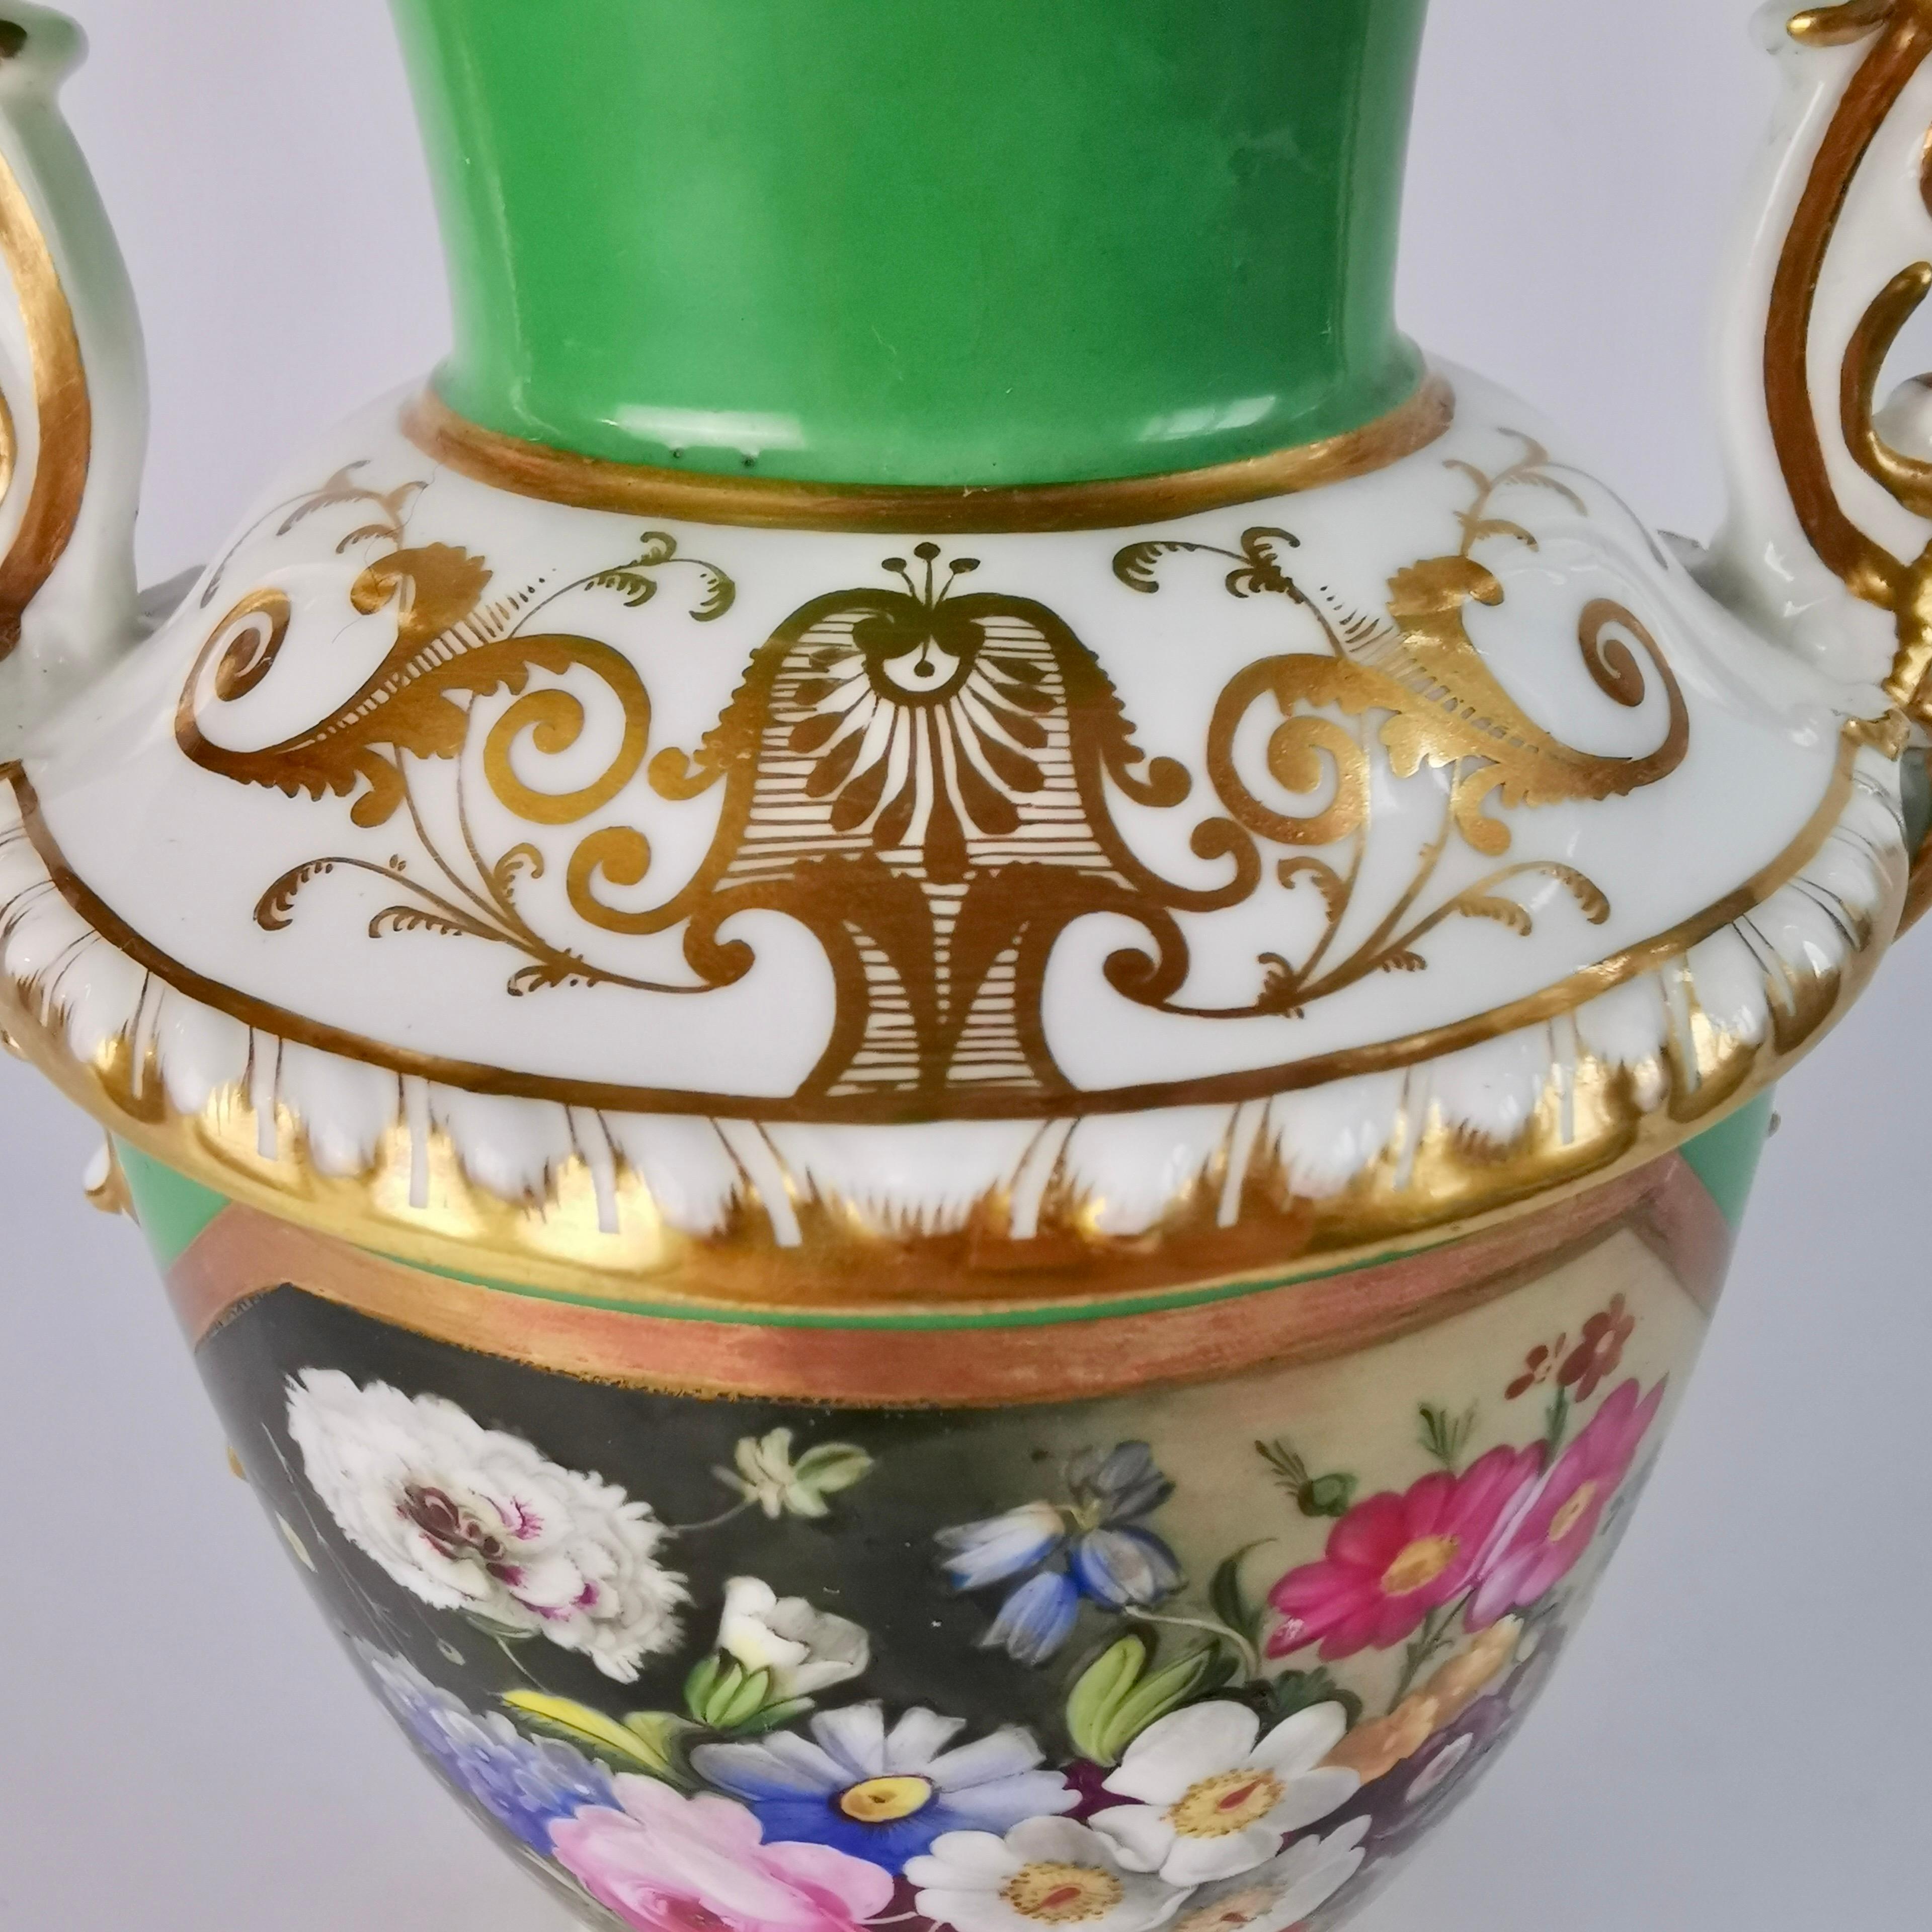 Mid-19th Century Minton Porcelain Vase, Elgin Shape, Green with Floral Reserve, 1830-1835